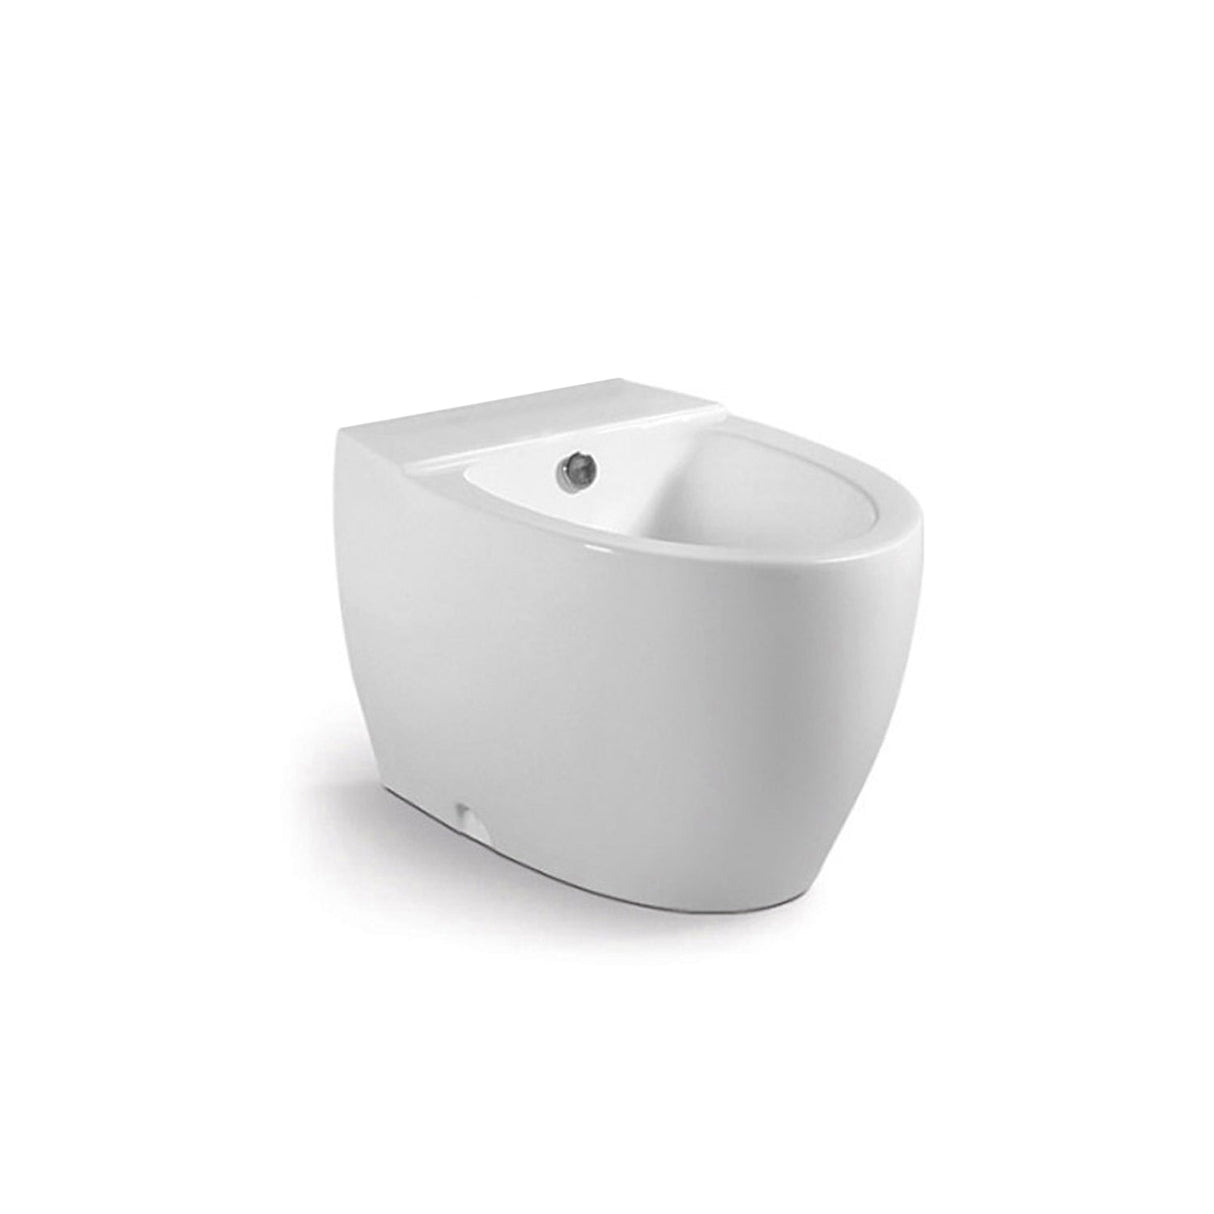 DAX Ceramic Modern Square Bidet, White BSN-1101